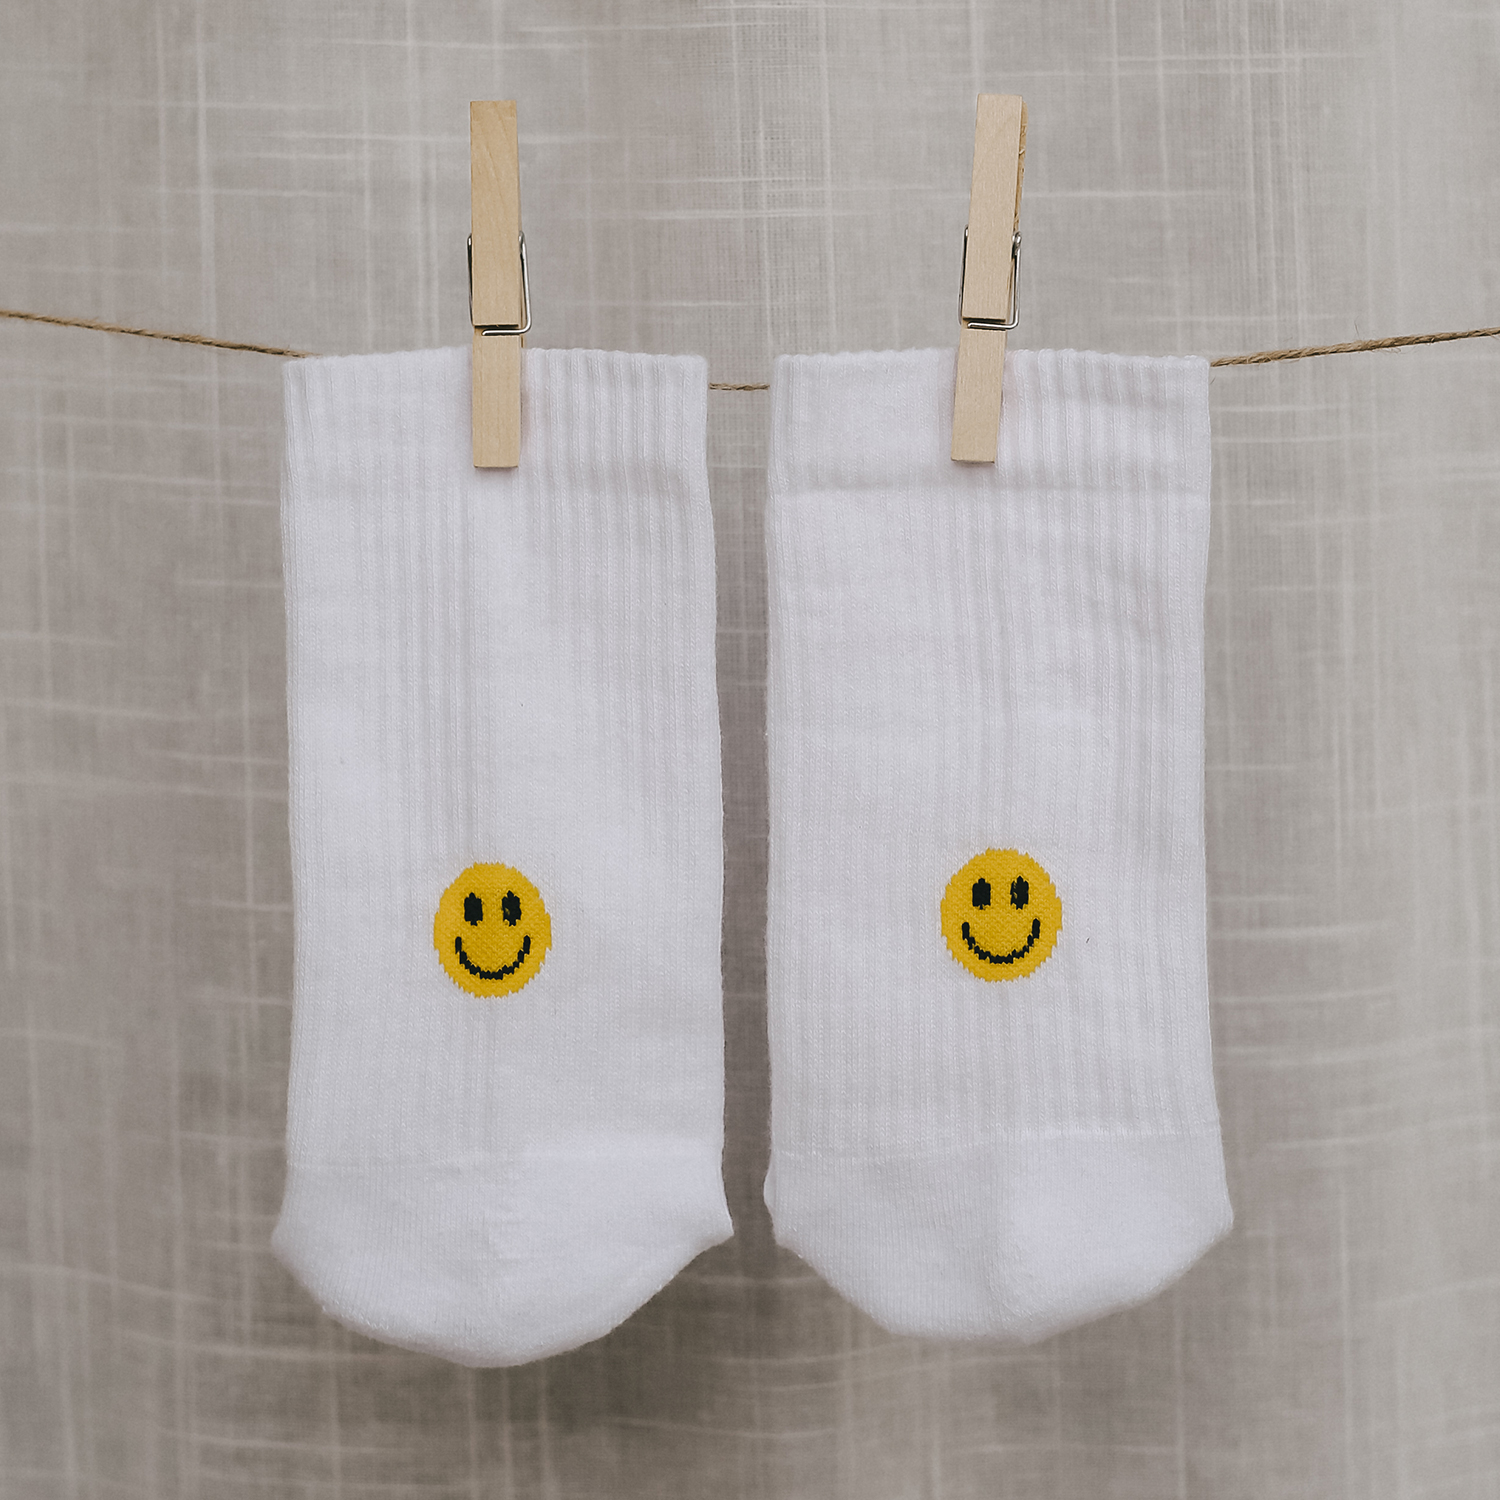 Socken Smiley gelb 43-46